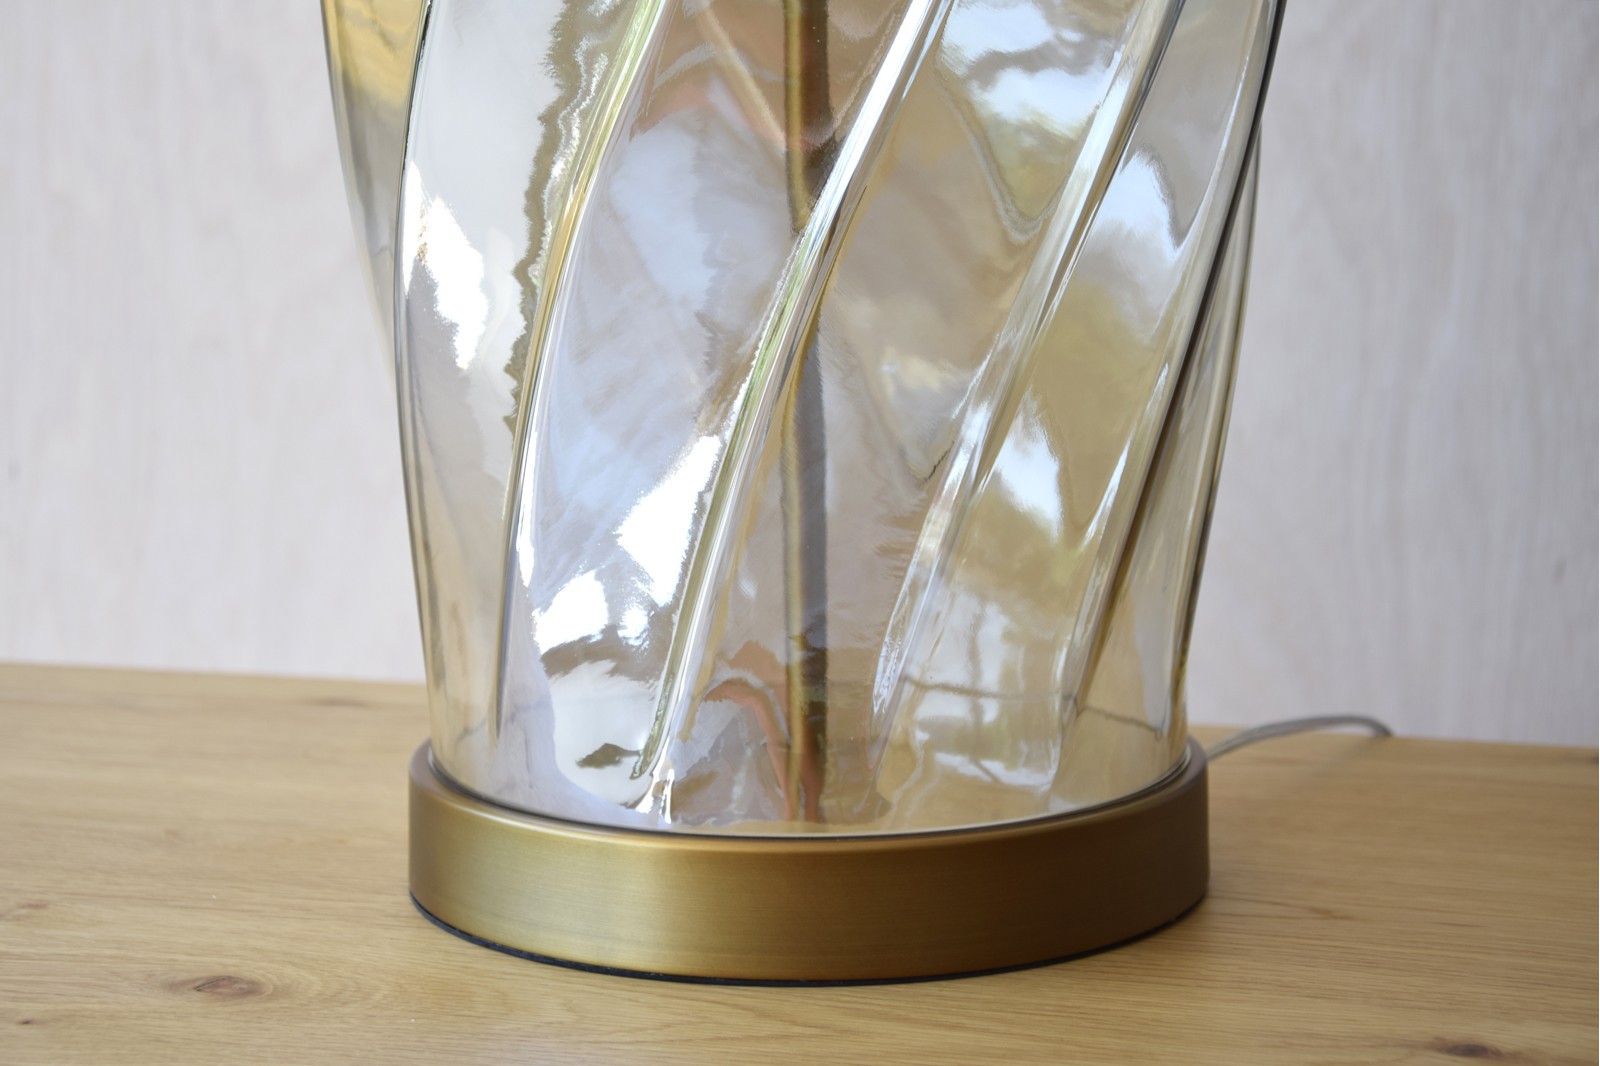 TWIST TABLE LAMP. AMBER GLASS